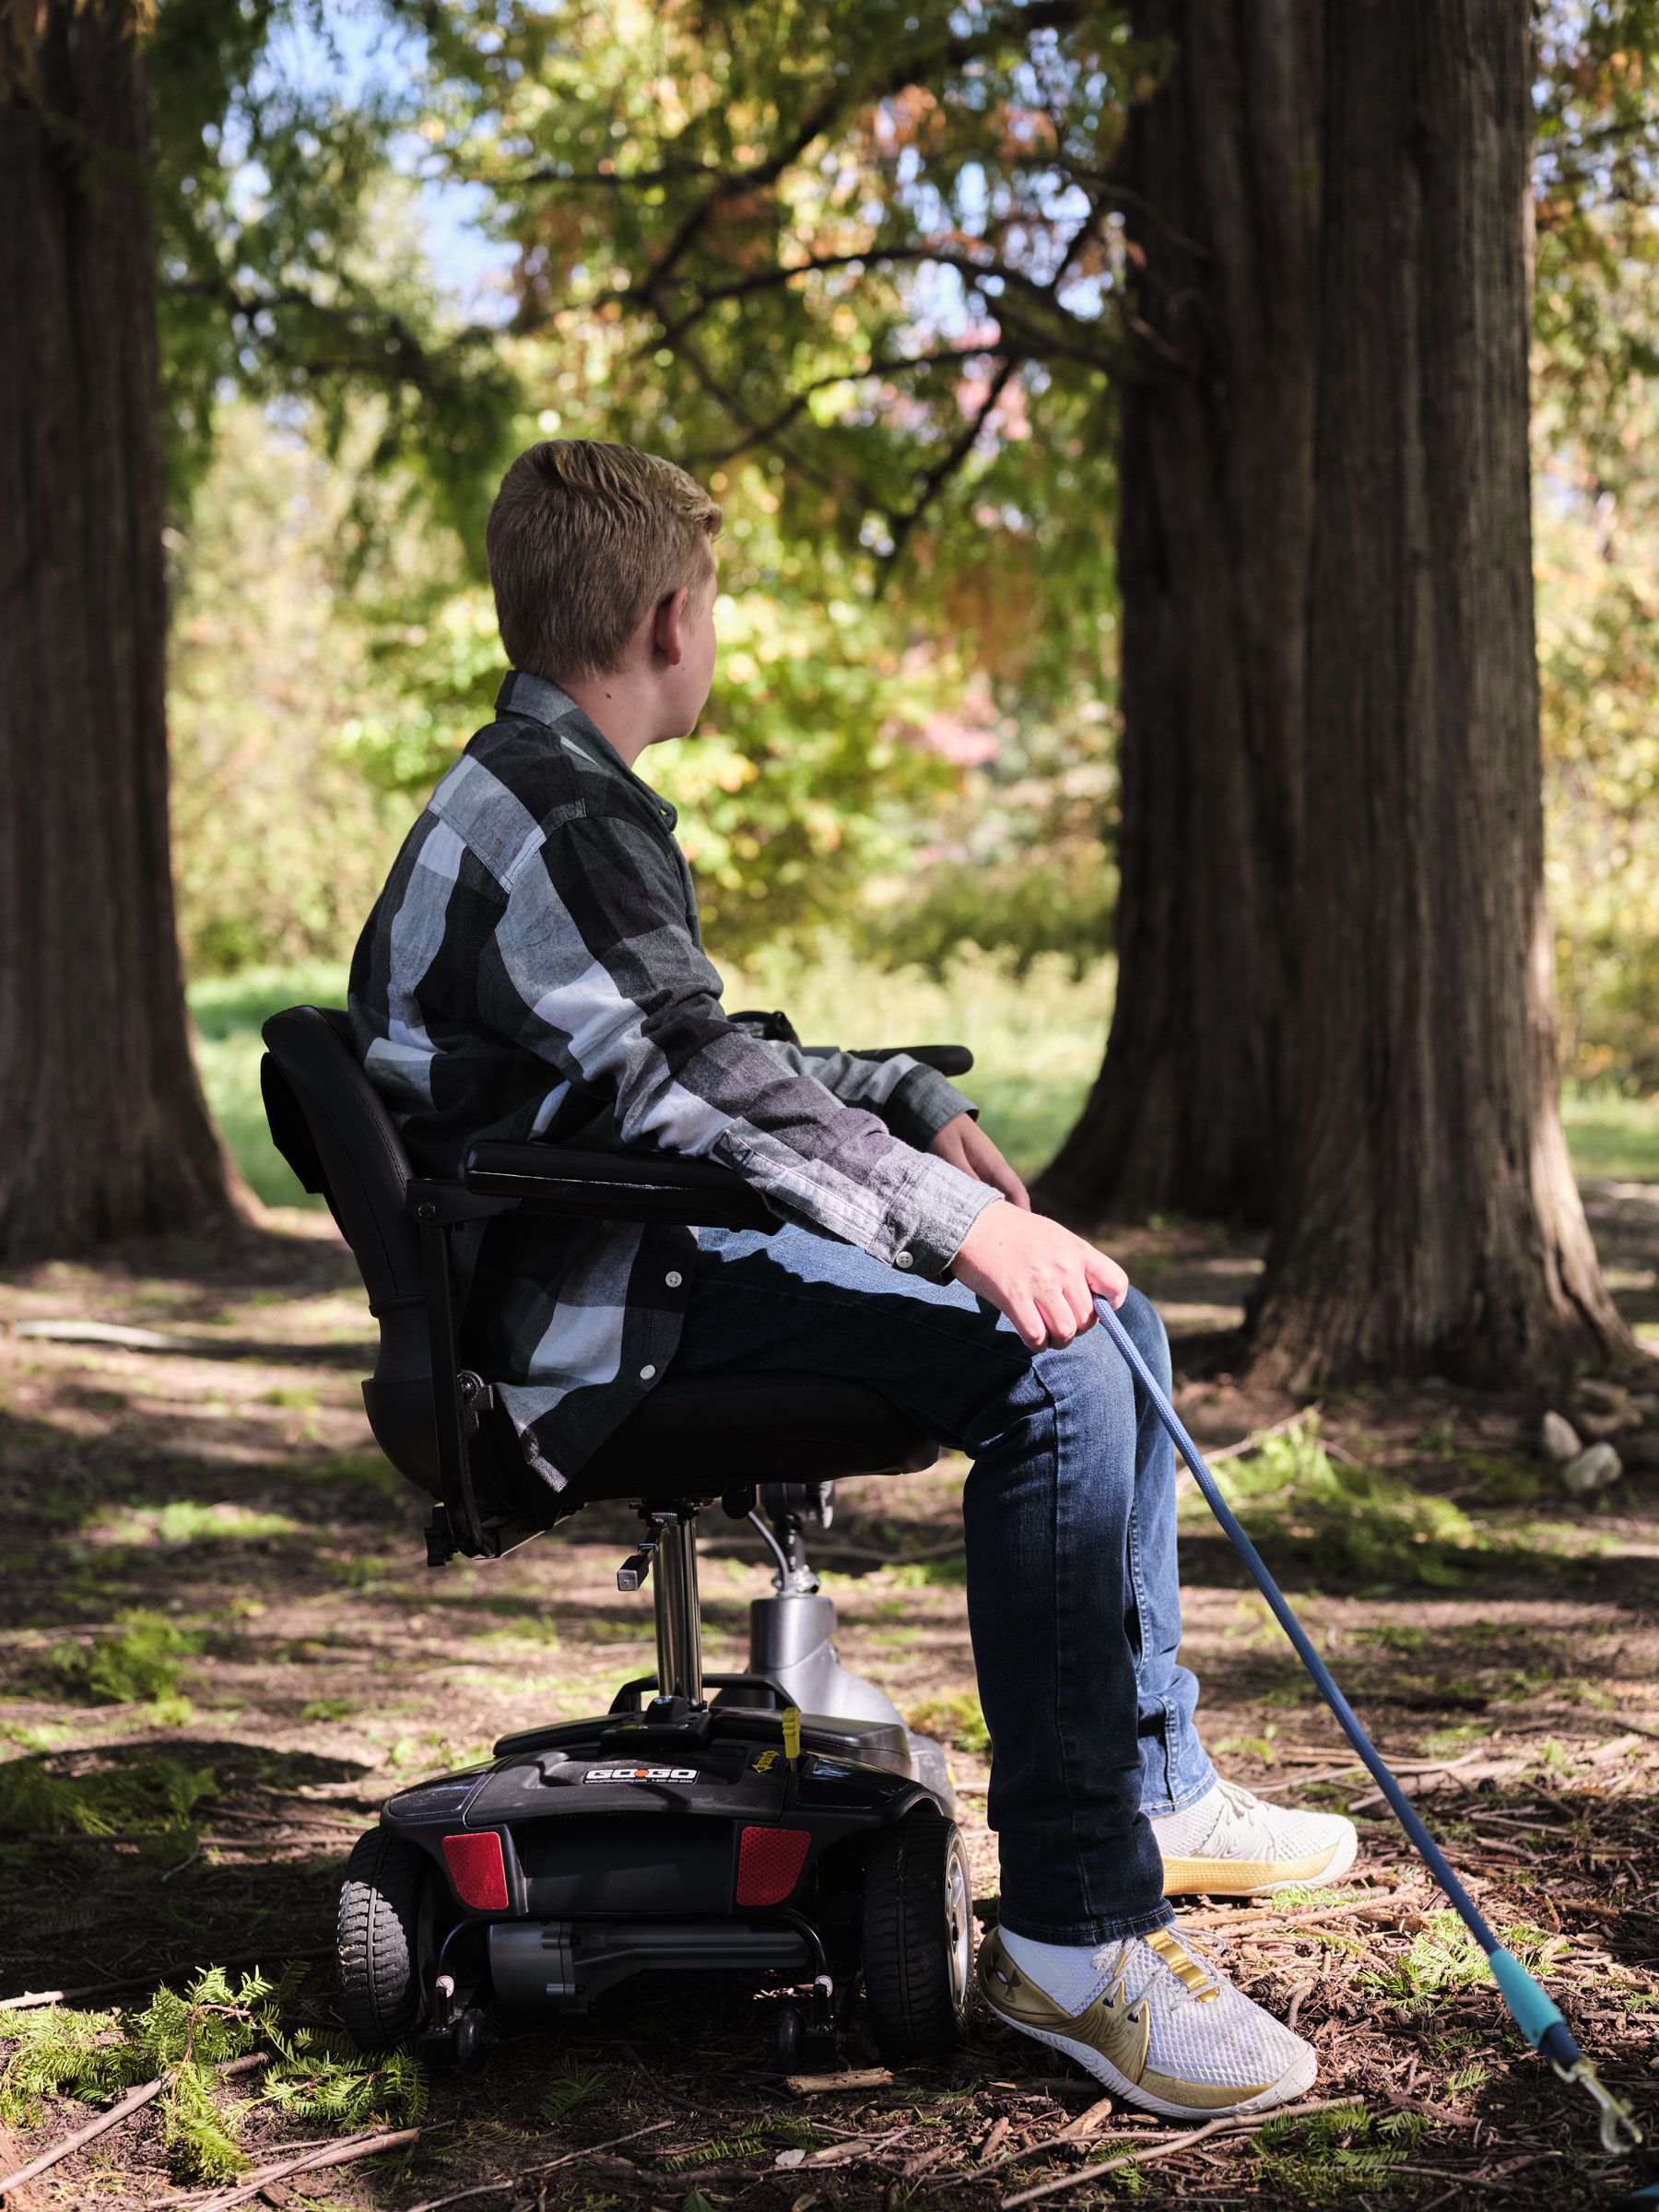 Ayden often uses a motorized chair to preserve energy. (Julie Renée Jones for TIME)